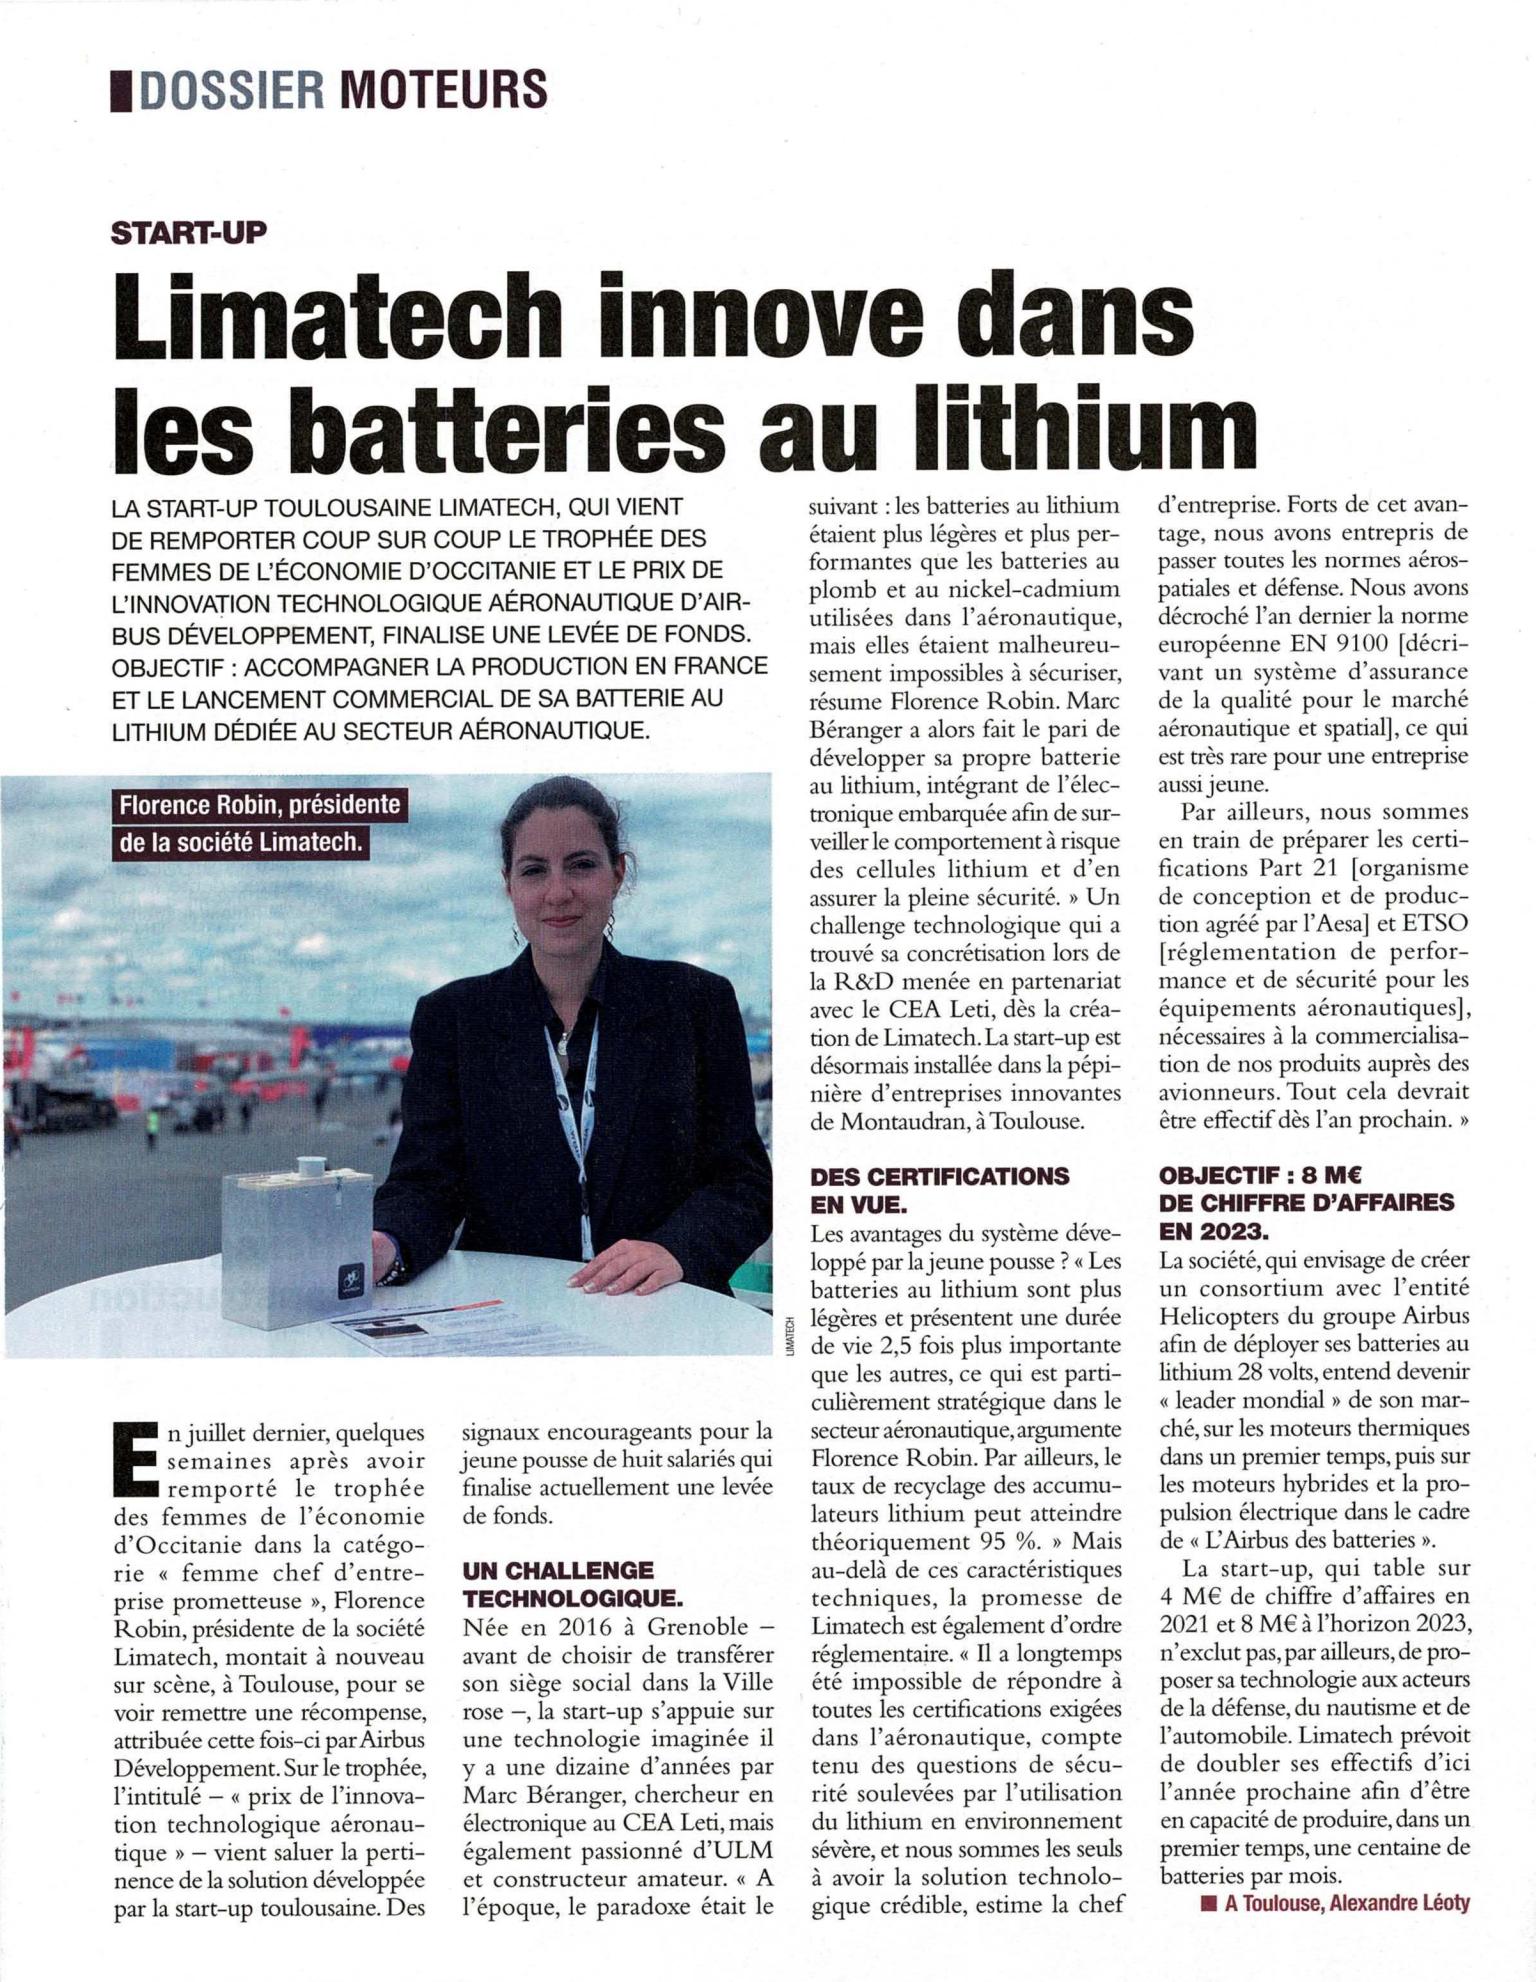 Batterie Lithium